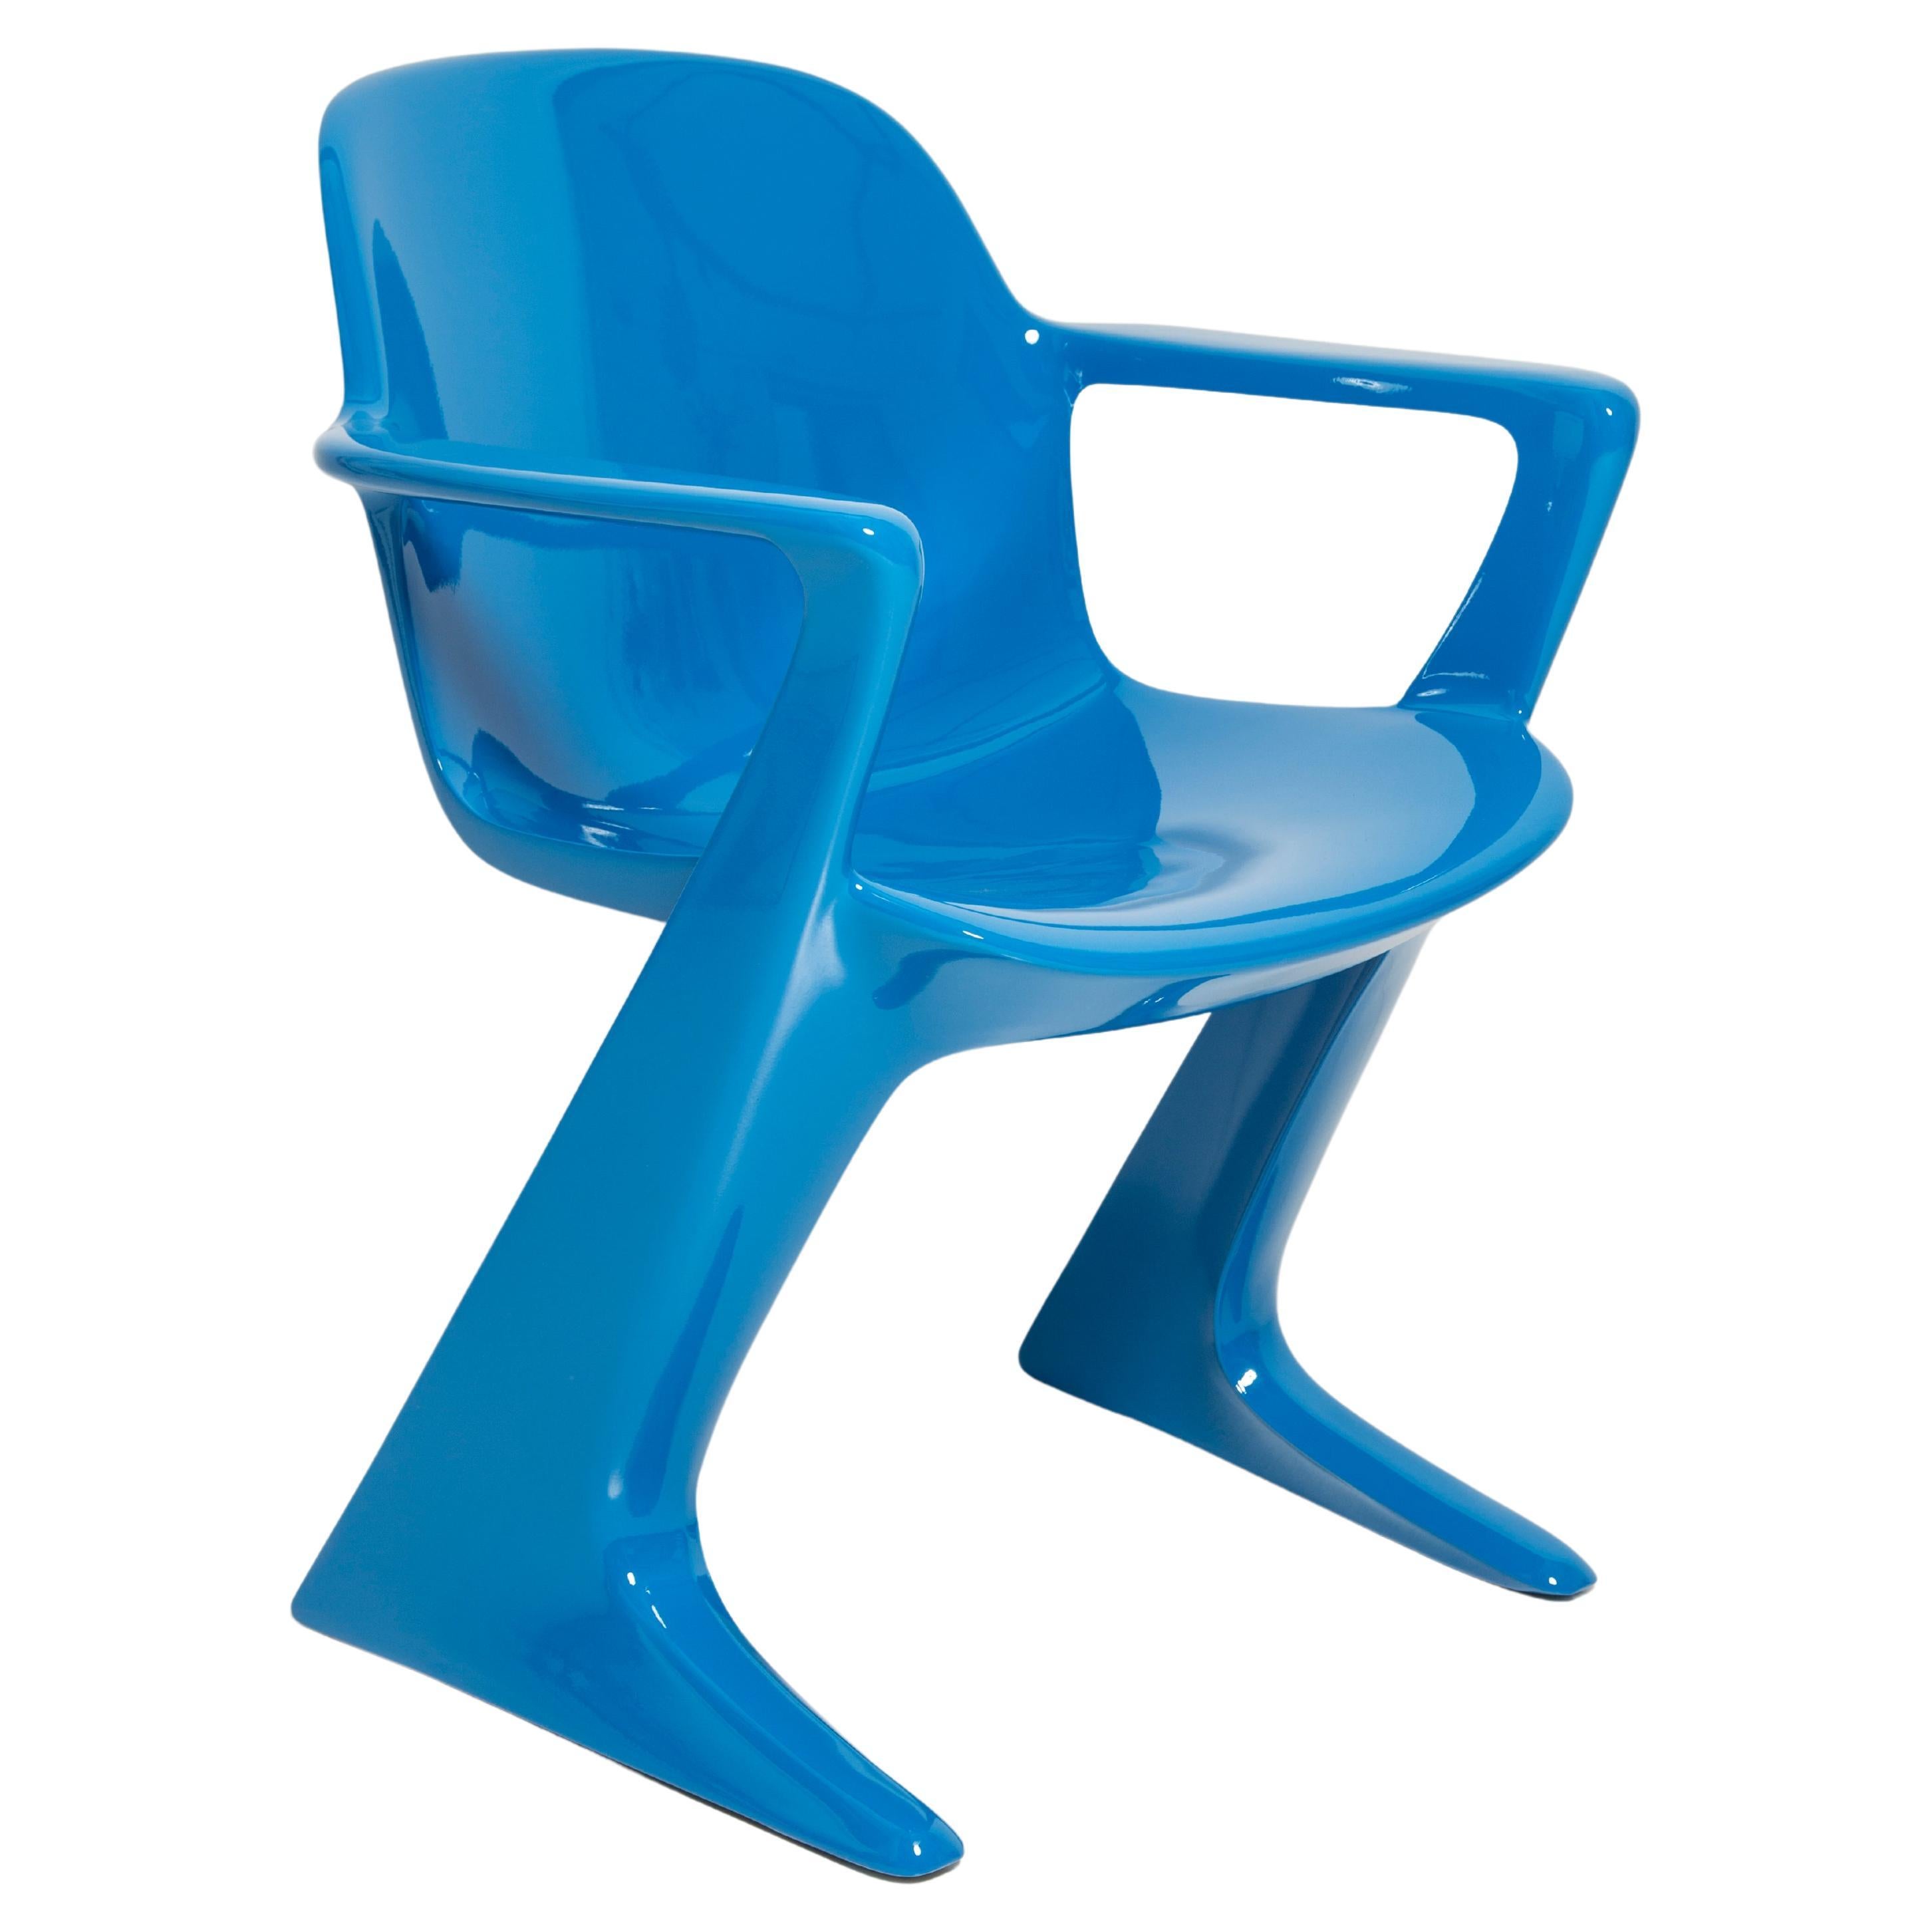 Blue Kangaroo Chair Designed by Ernst Moeckl, Germany, 1968